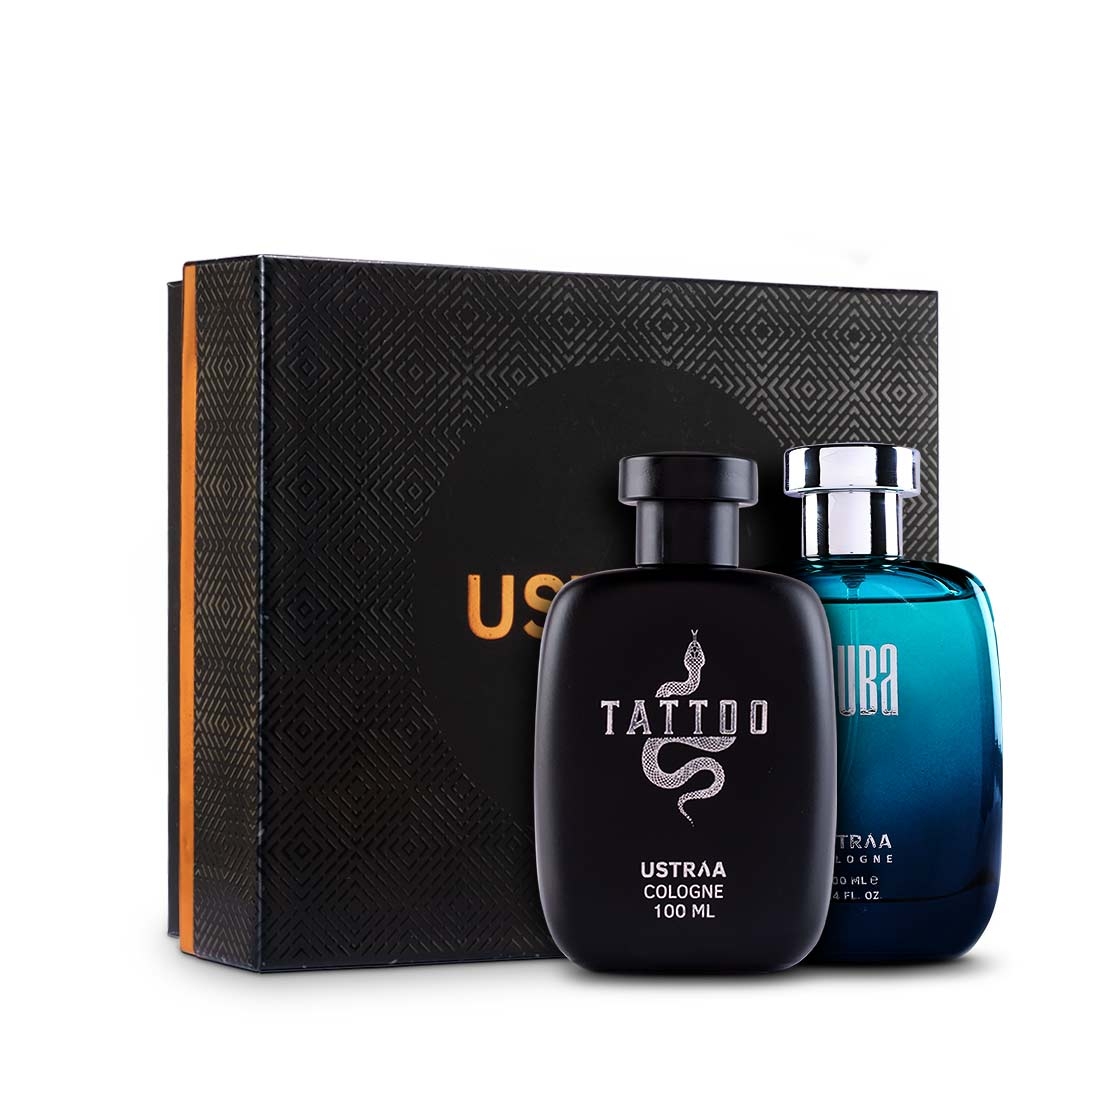 Ustraa | Fragrance Gift Box - Scuba Cologne 100ml & Tattoo Cologne 100ml